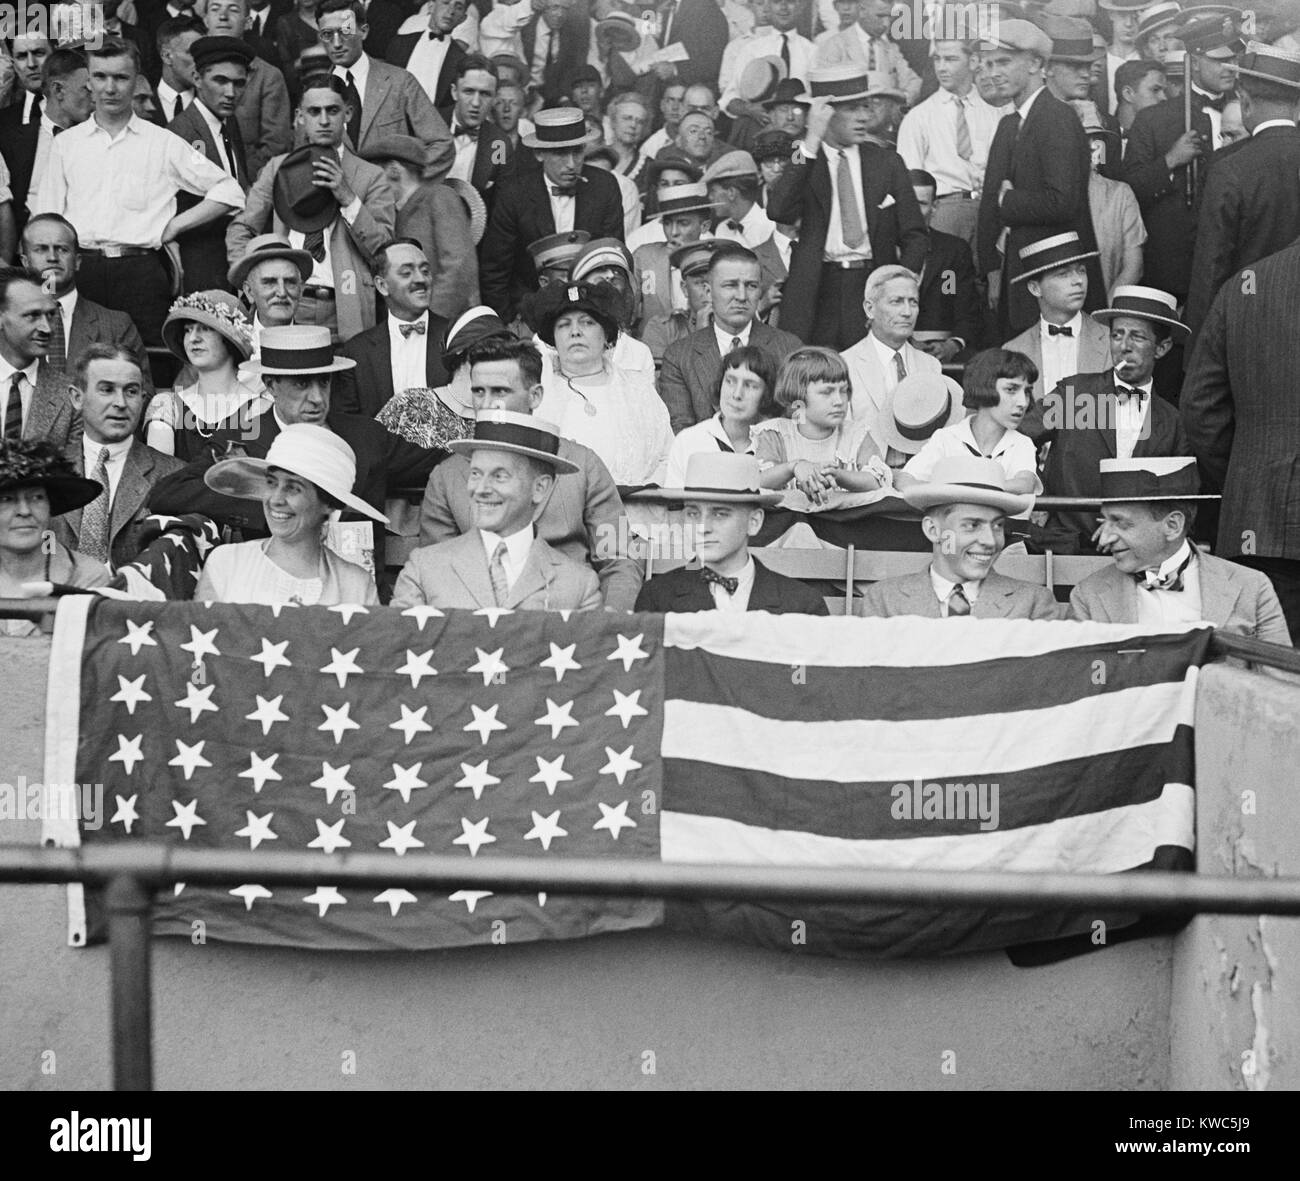 President Calvin Coolidge enjoying a Washington Senators baseball game with his family in 1924. L-R: First Lady Grace; the President; Calvin, Jr., age 16; John, age 17. (BSLOC 2015 15 164) Stock Photo